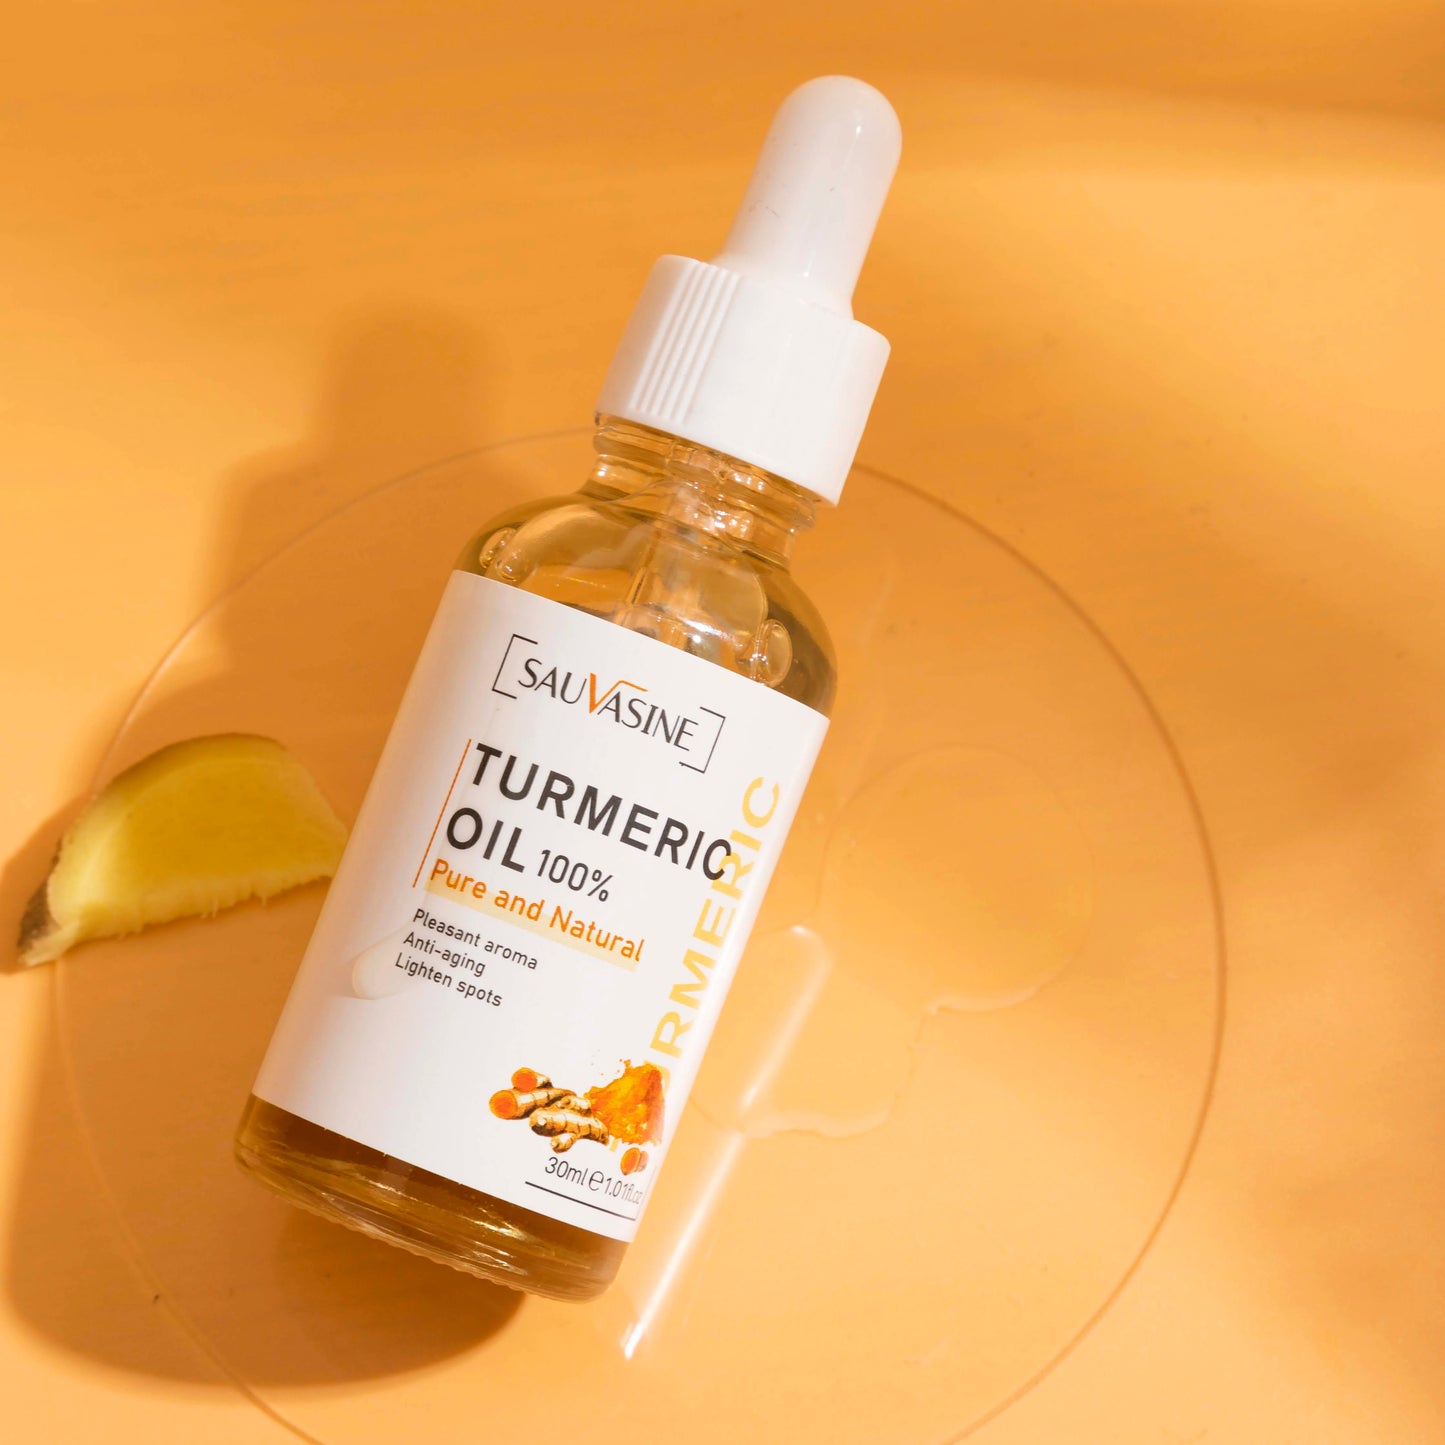 Sauvasine Turmeric Oil 100% Pure and Natural 30ml